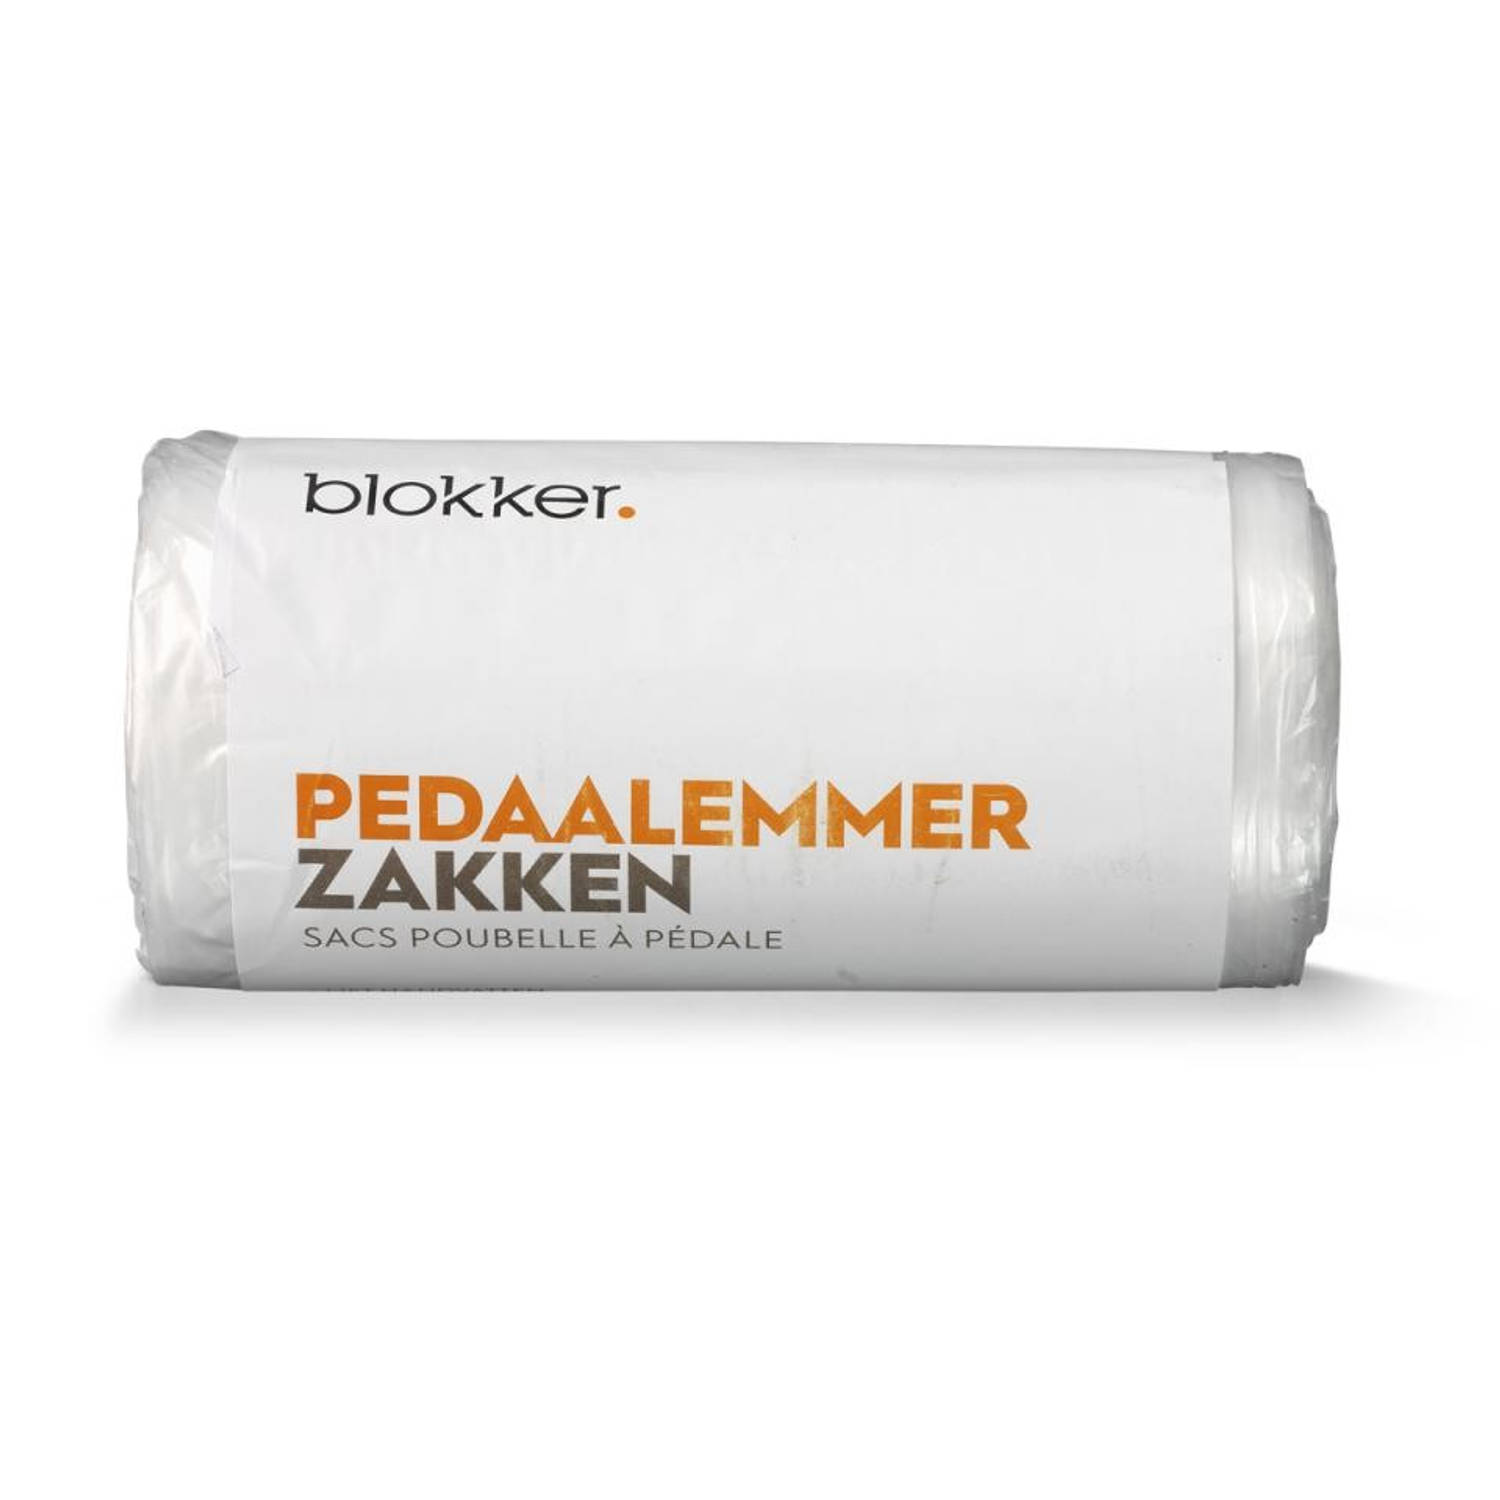 Zelfgenoegzaamheid vleugel Serena Blokker pedaalemmerzakken - 20 liter - 40 stuks | Blokker